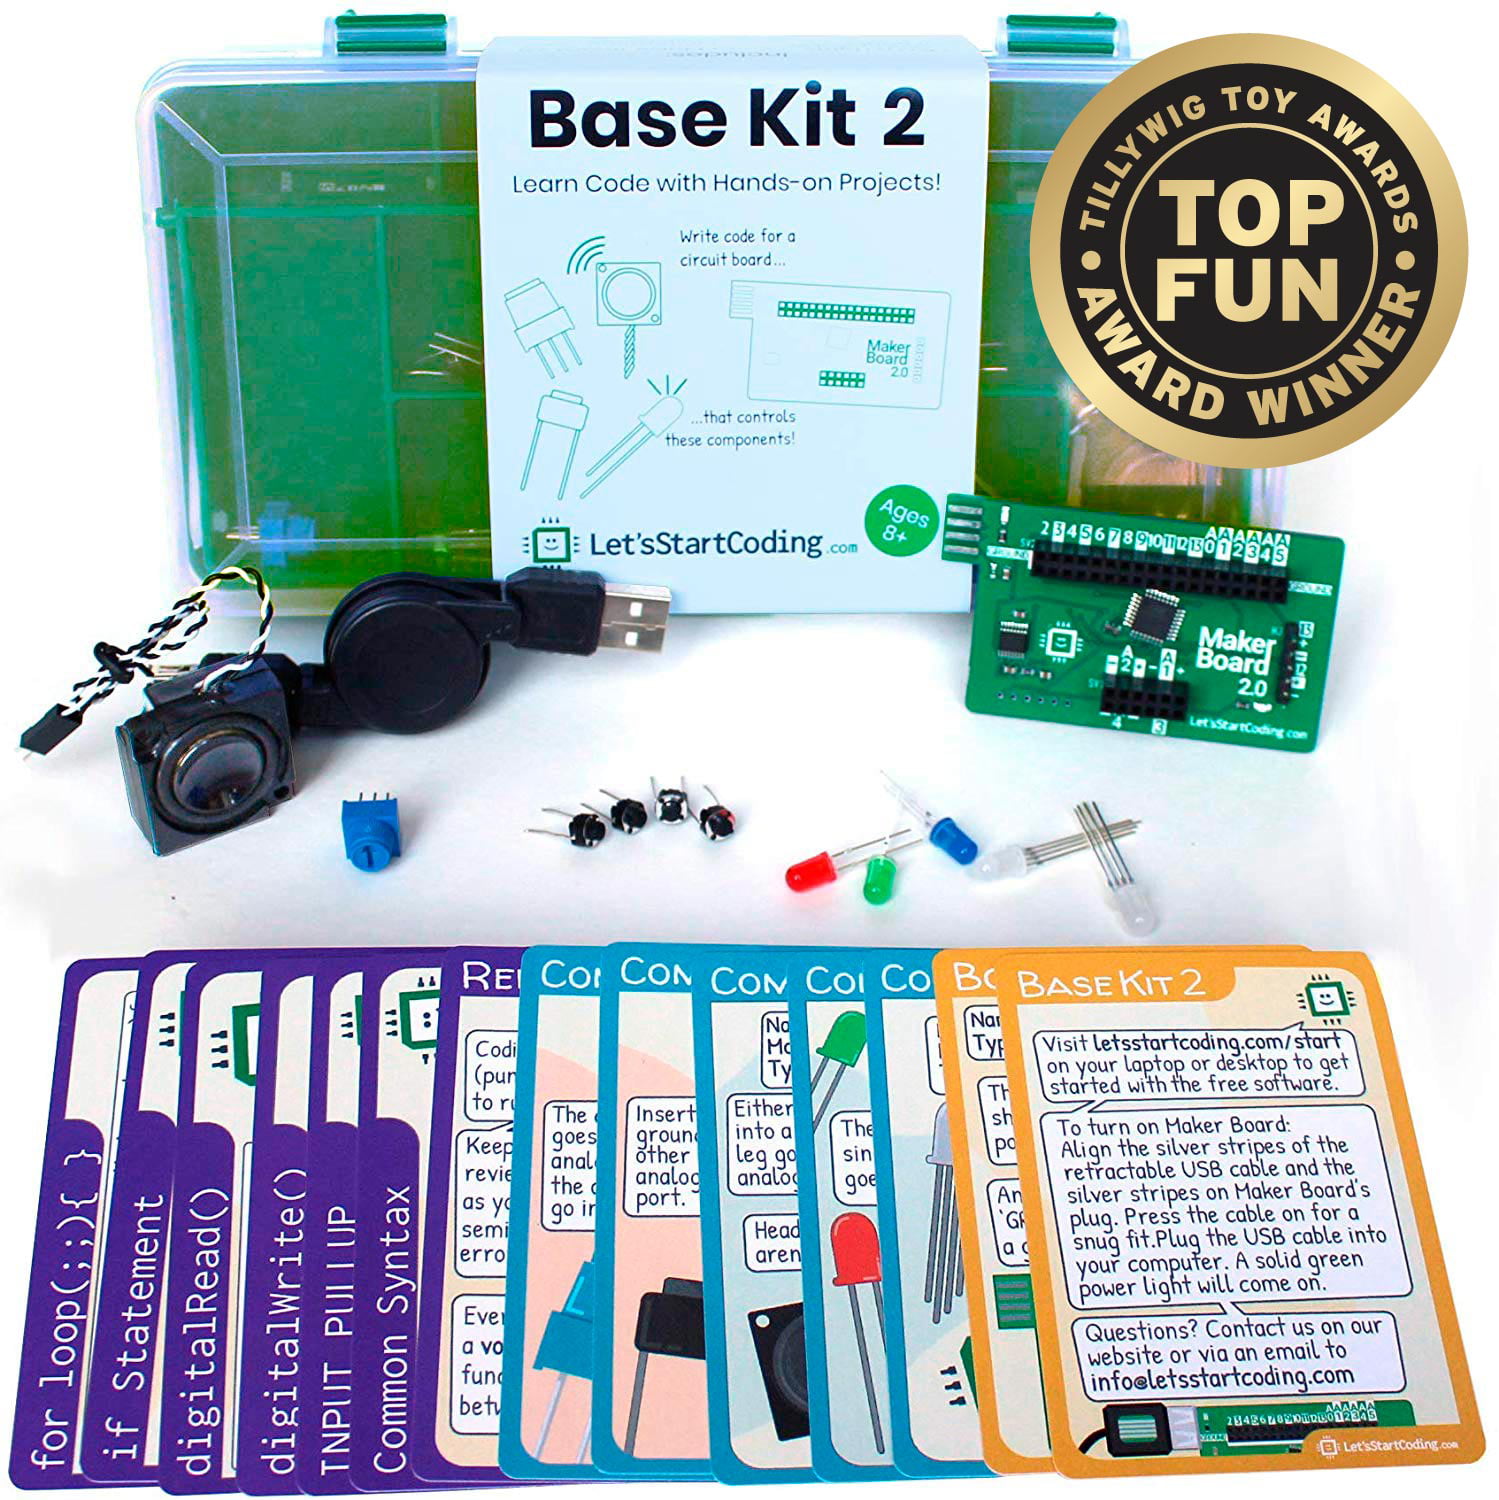 Coding and STEM kit for boys and girls 8-12 from Let's Start Coding Base Kit 2